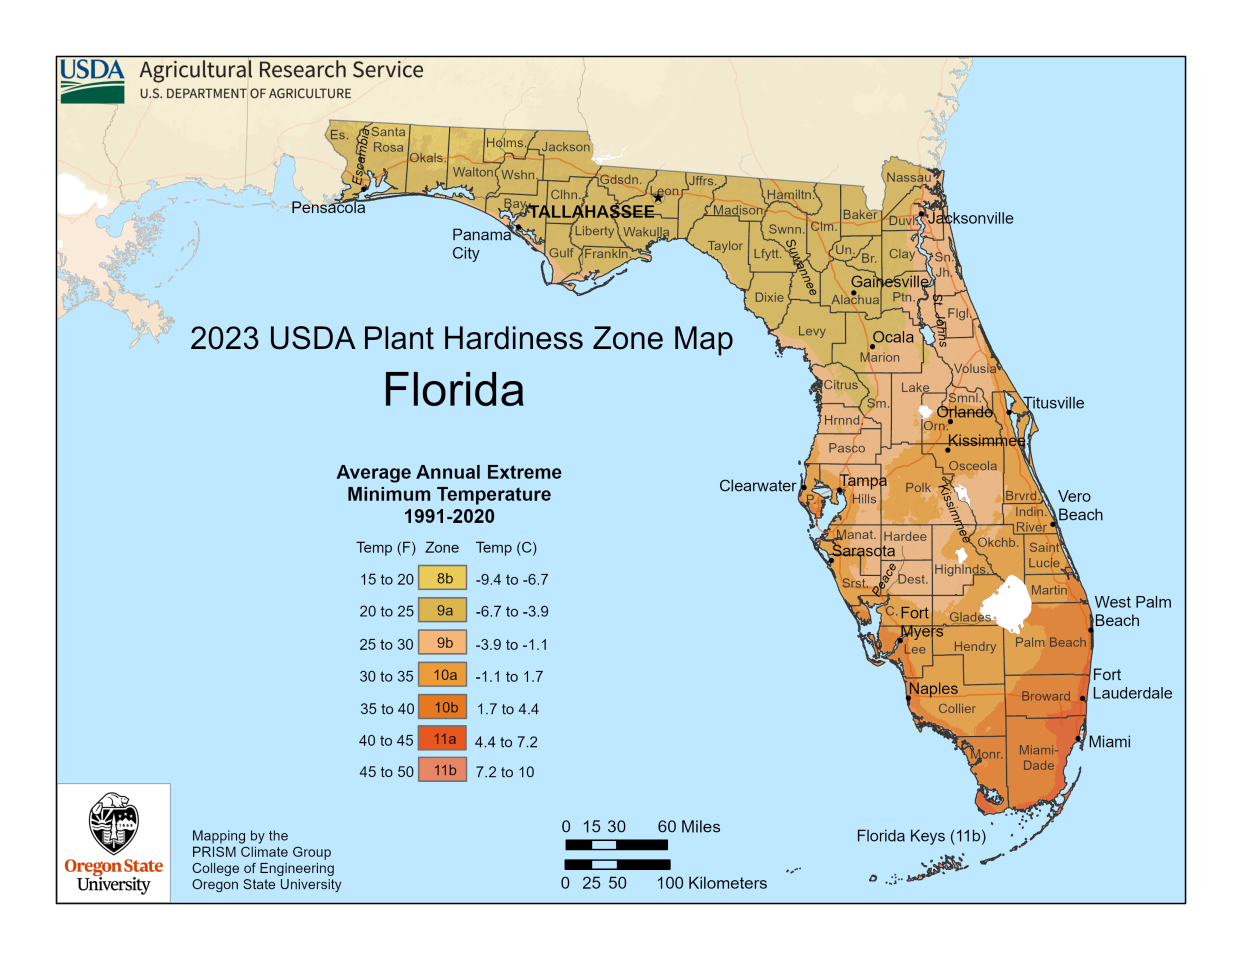 USDA Plant Hardiness Zone Map, 2023 (Accessed from https://planthardiness.ars.usda.gov/).